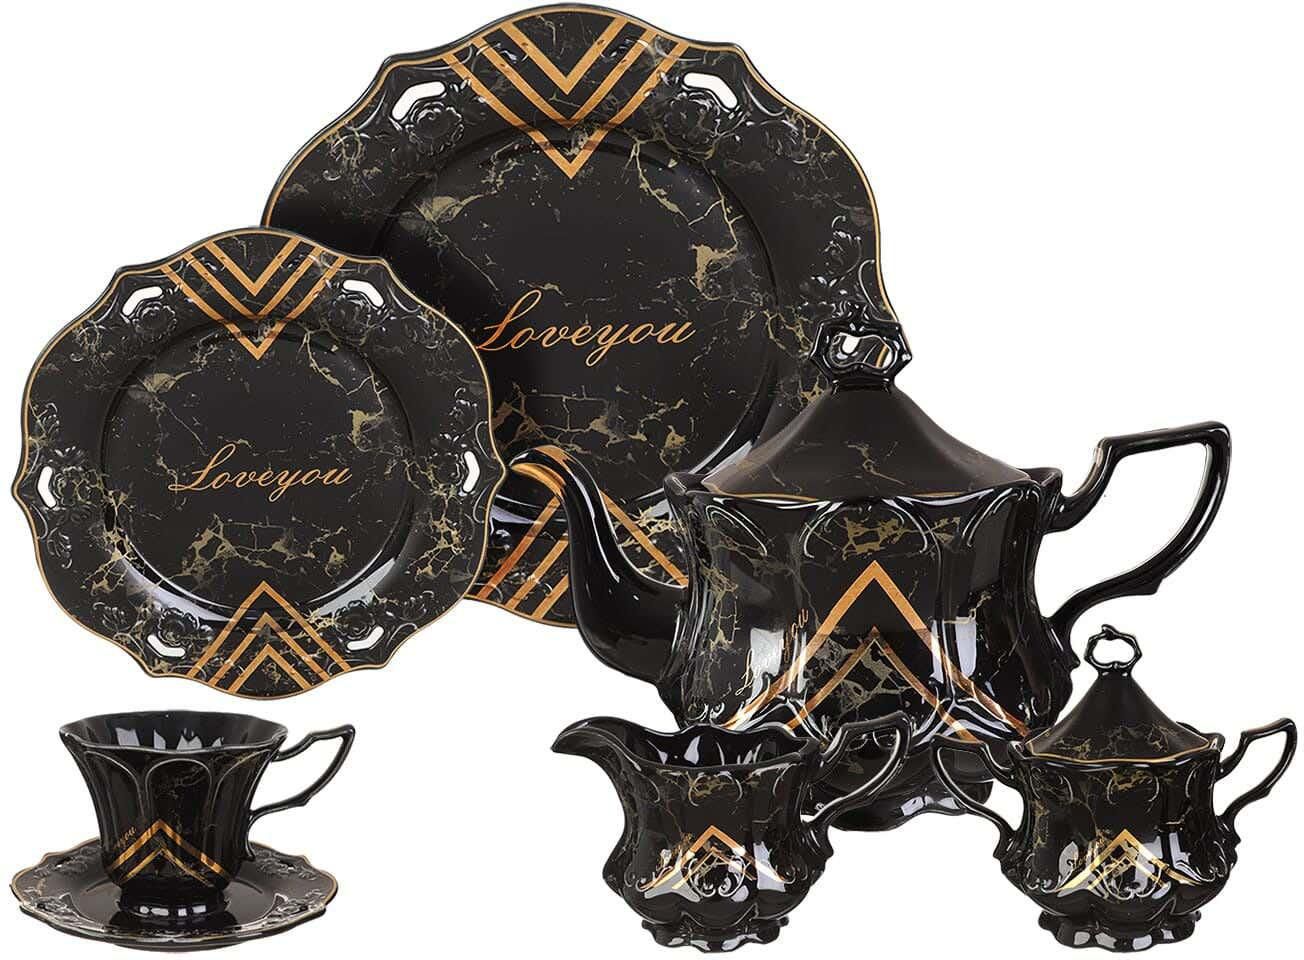 Get Lotus Porcelain Cake & Tea Serving Set, 24 Pieces - Black with best offers | Raneen.com